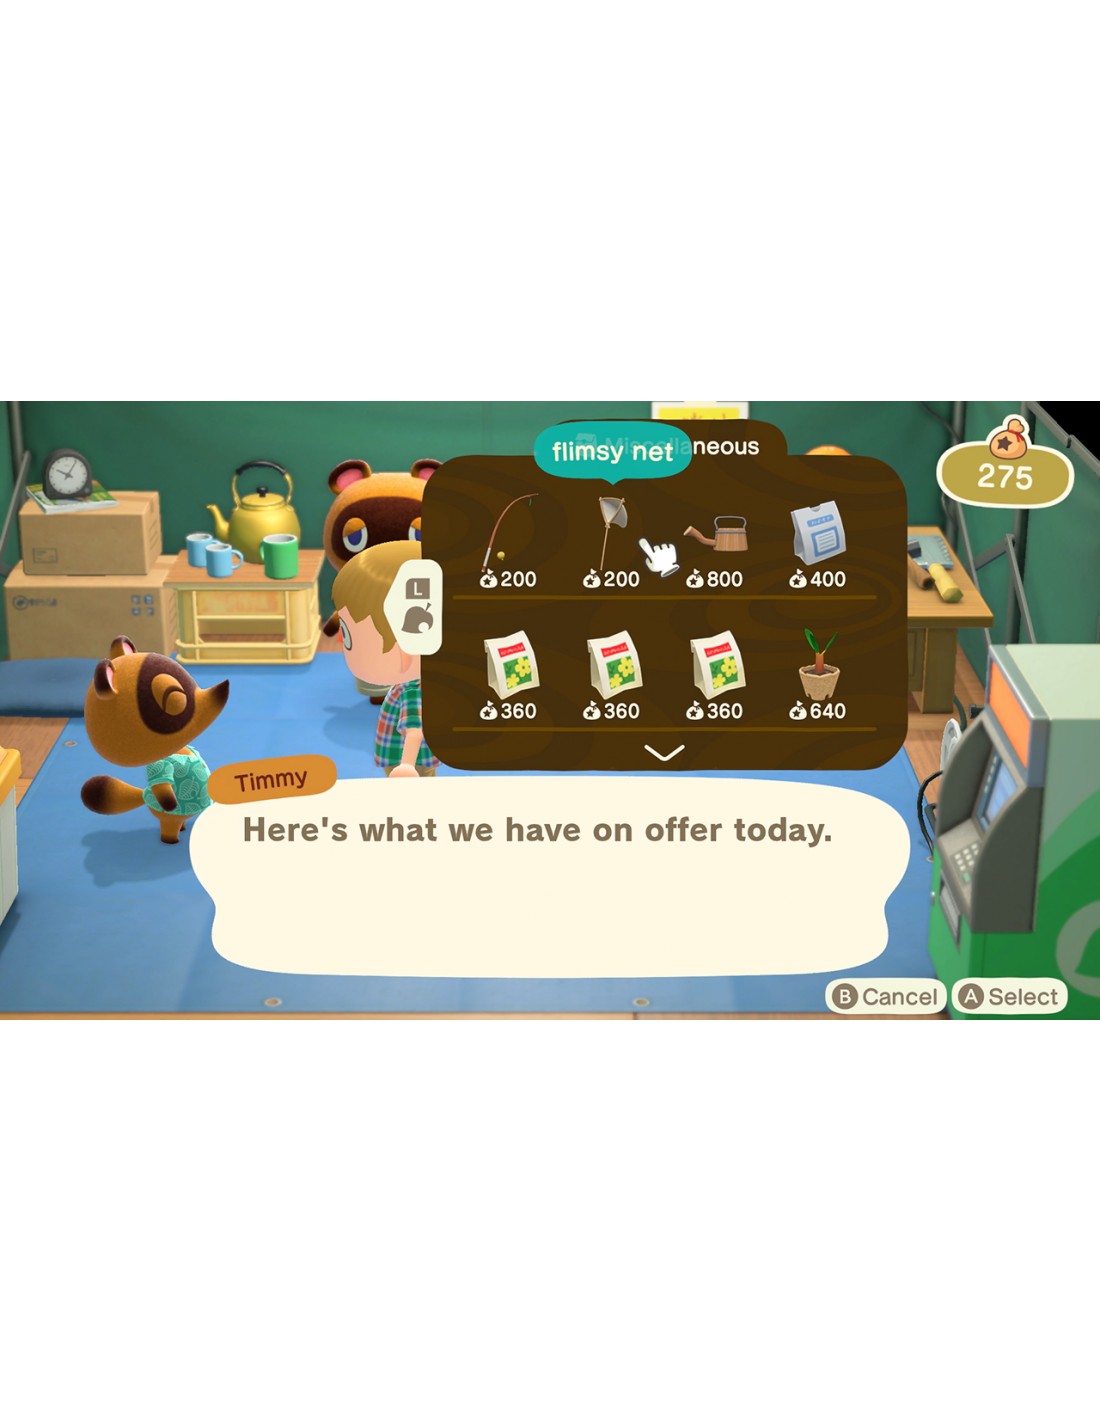 Nintendo Animal Crossing: New Horizons Standard Inglese, ITA Nintendo Switch  - gioco per Nintendo Switch - Nintendo - Simulazione - Videogioco